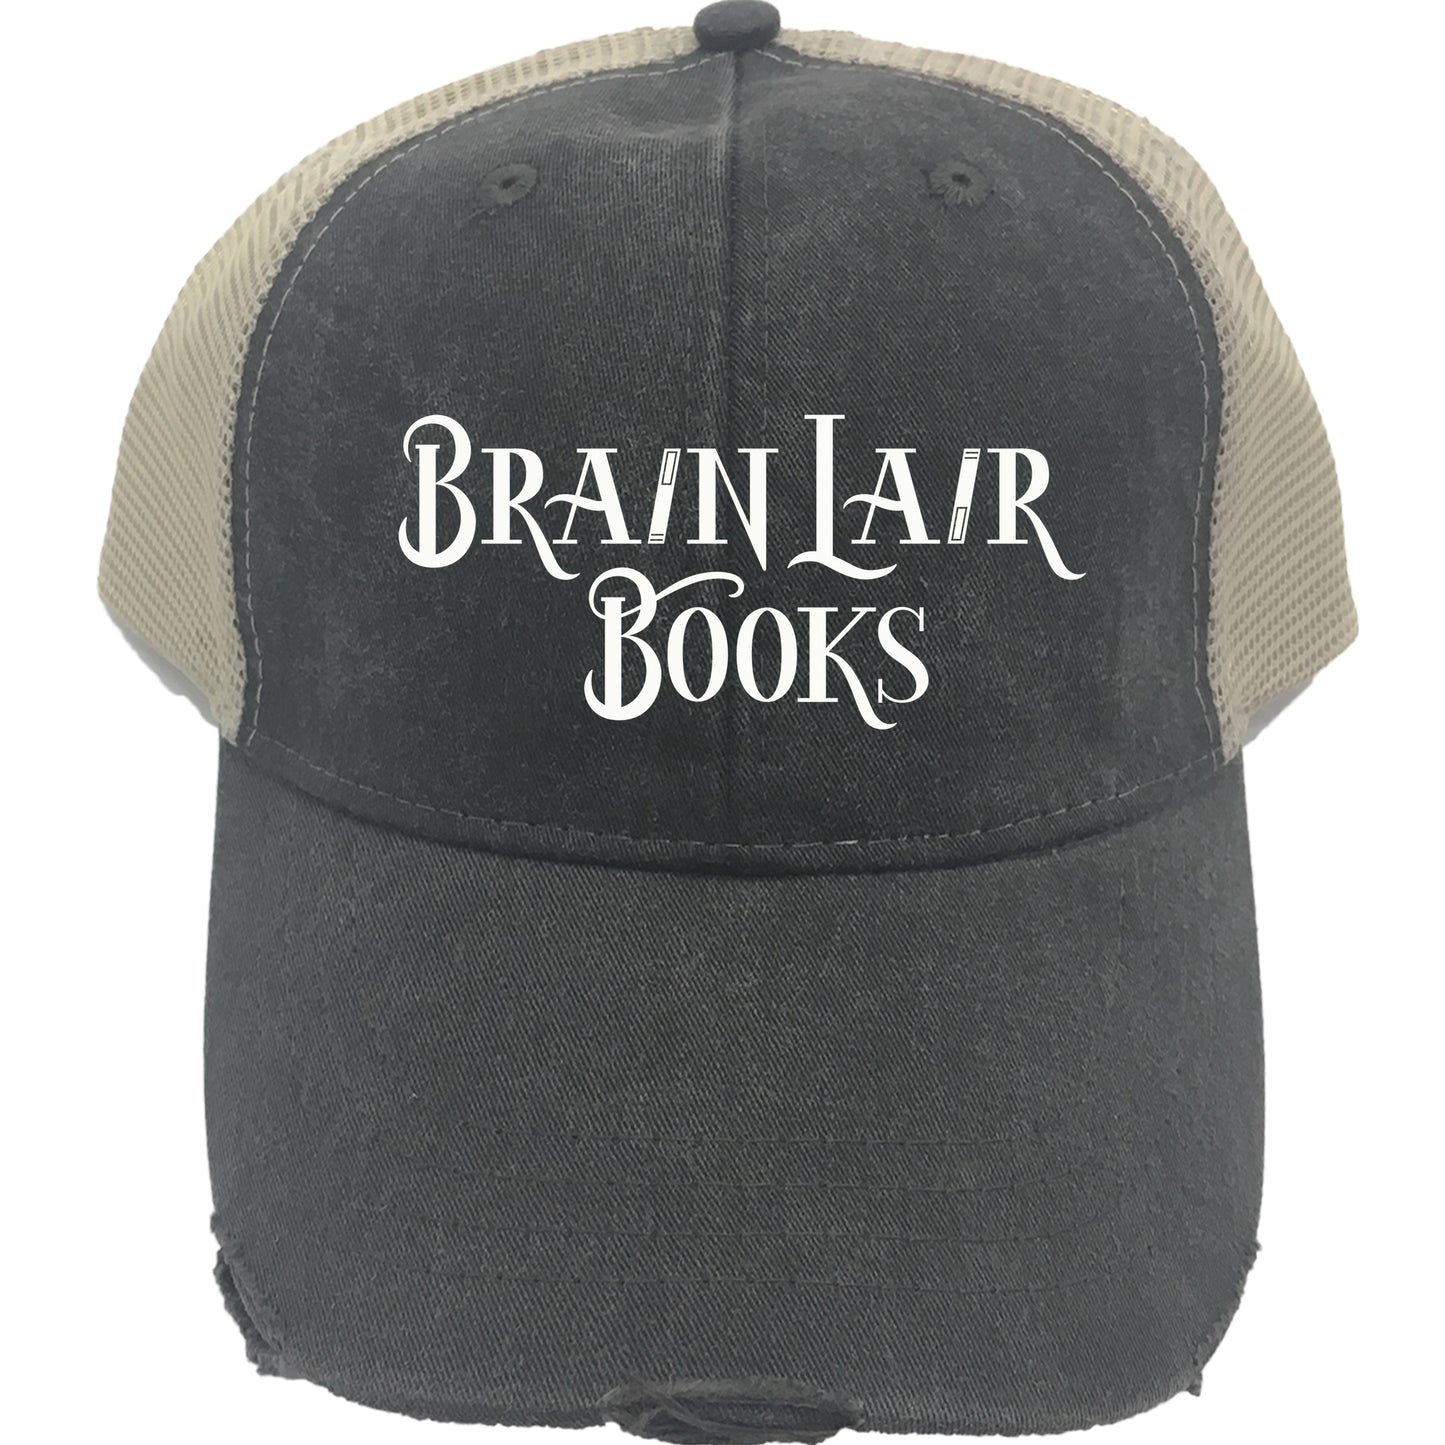 BRAIN LAIR BOOKS | EMBROIDERED MESH HAT | LOGO